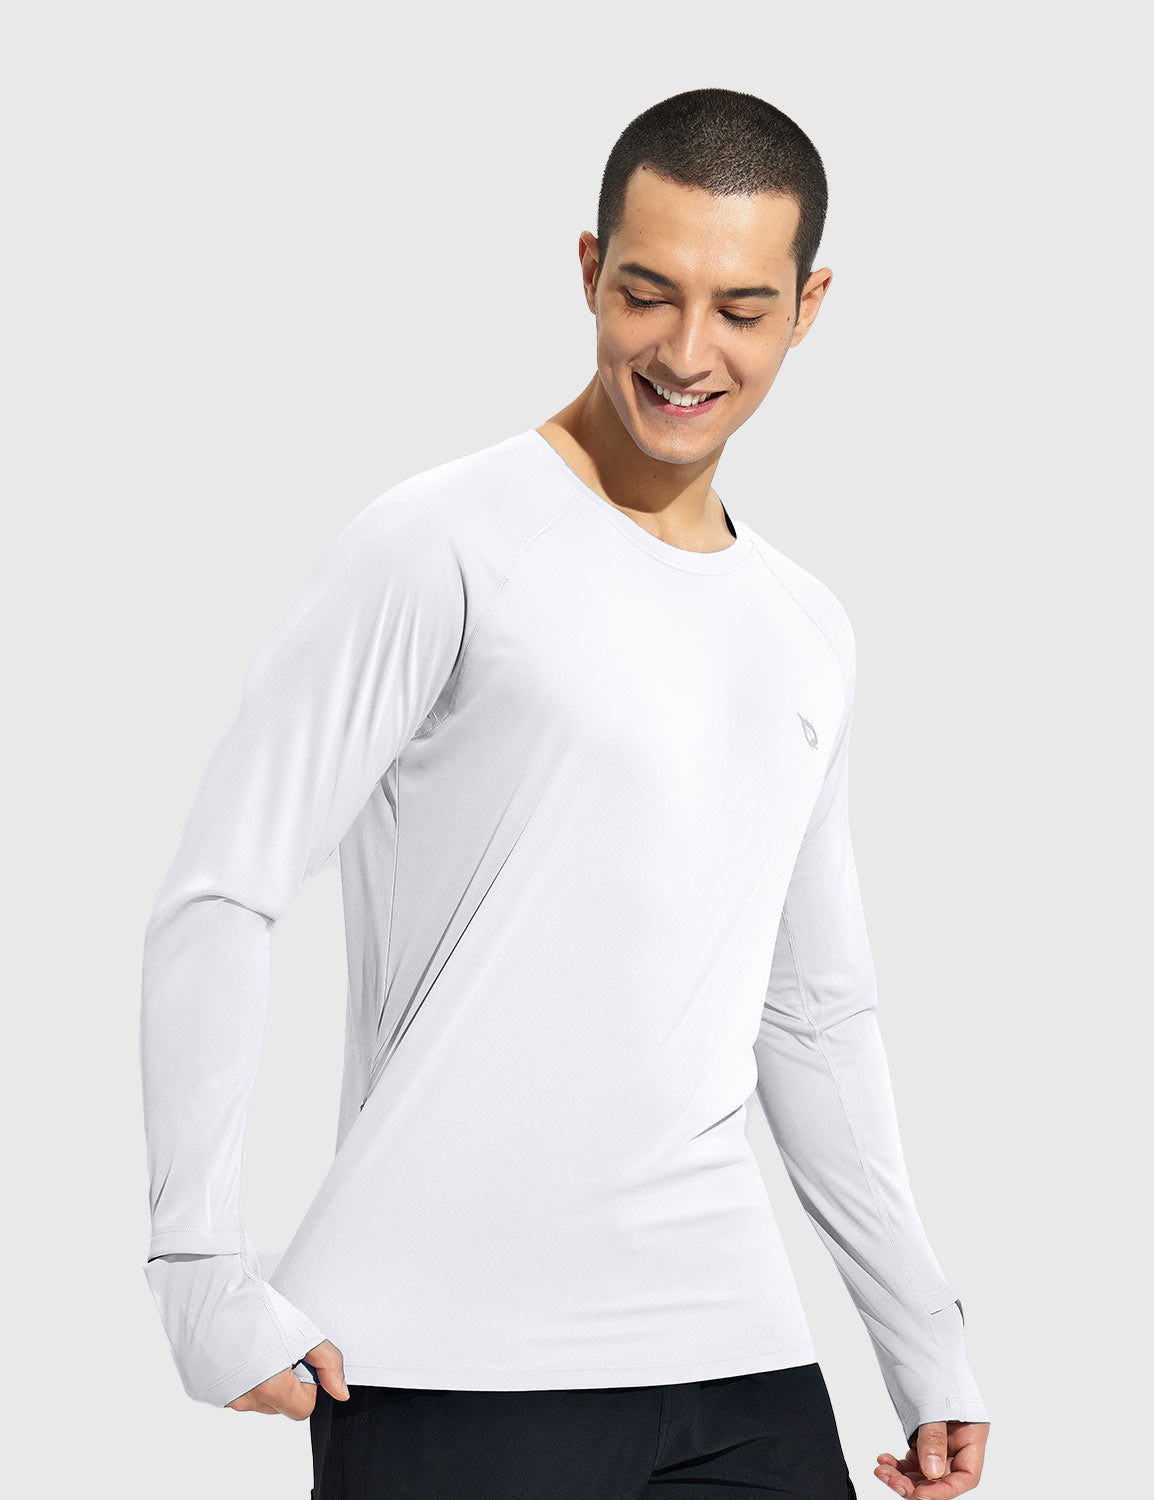 Baleaf Men‘s Quick-dry UPF 50+ Zipper Pocket Shirt Lucent White Side